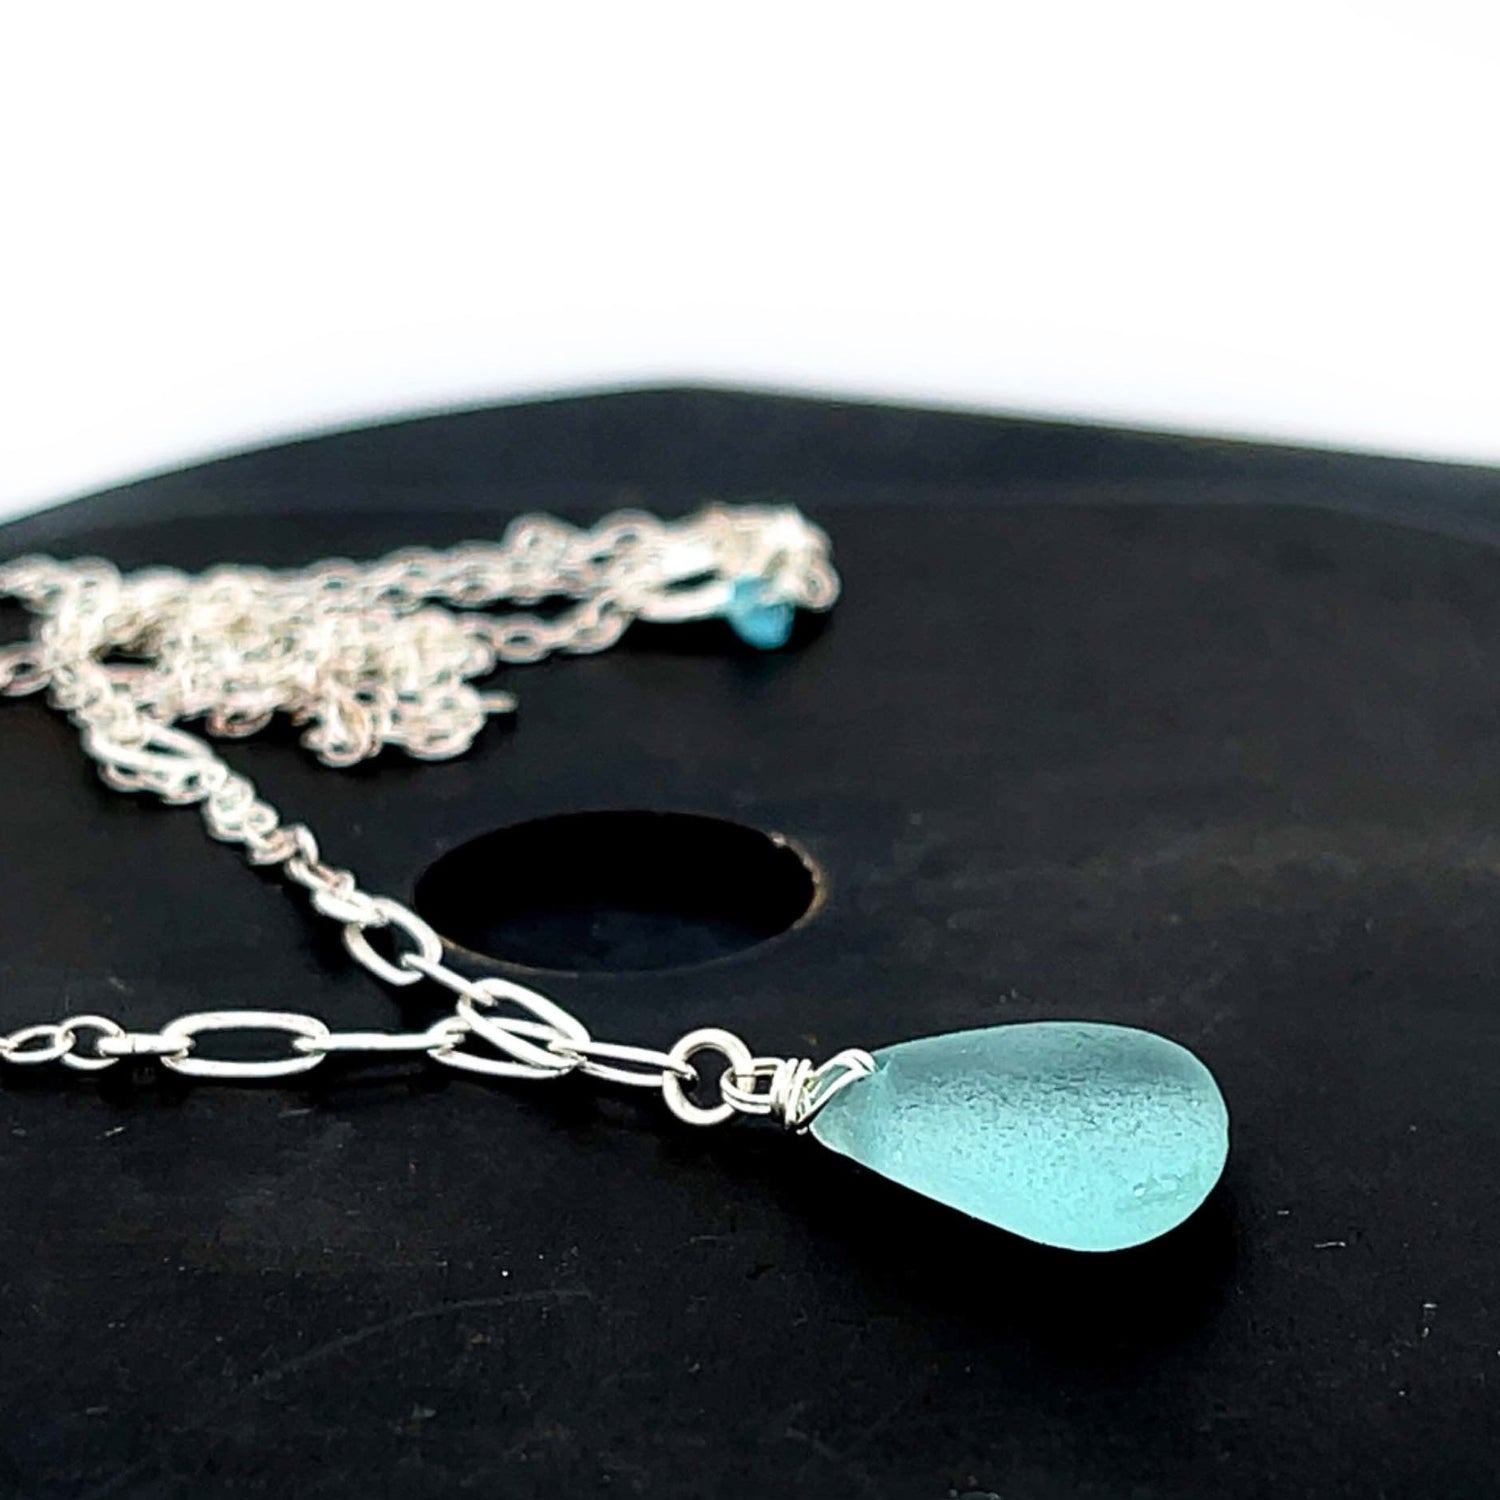 aquamarine necklace, silver necklace, lariat style necklace